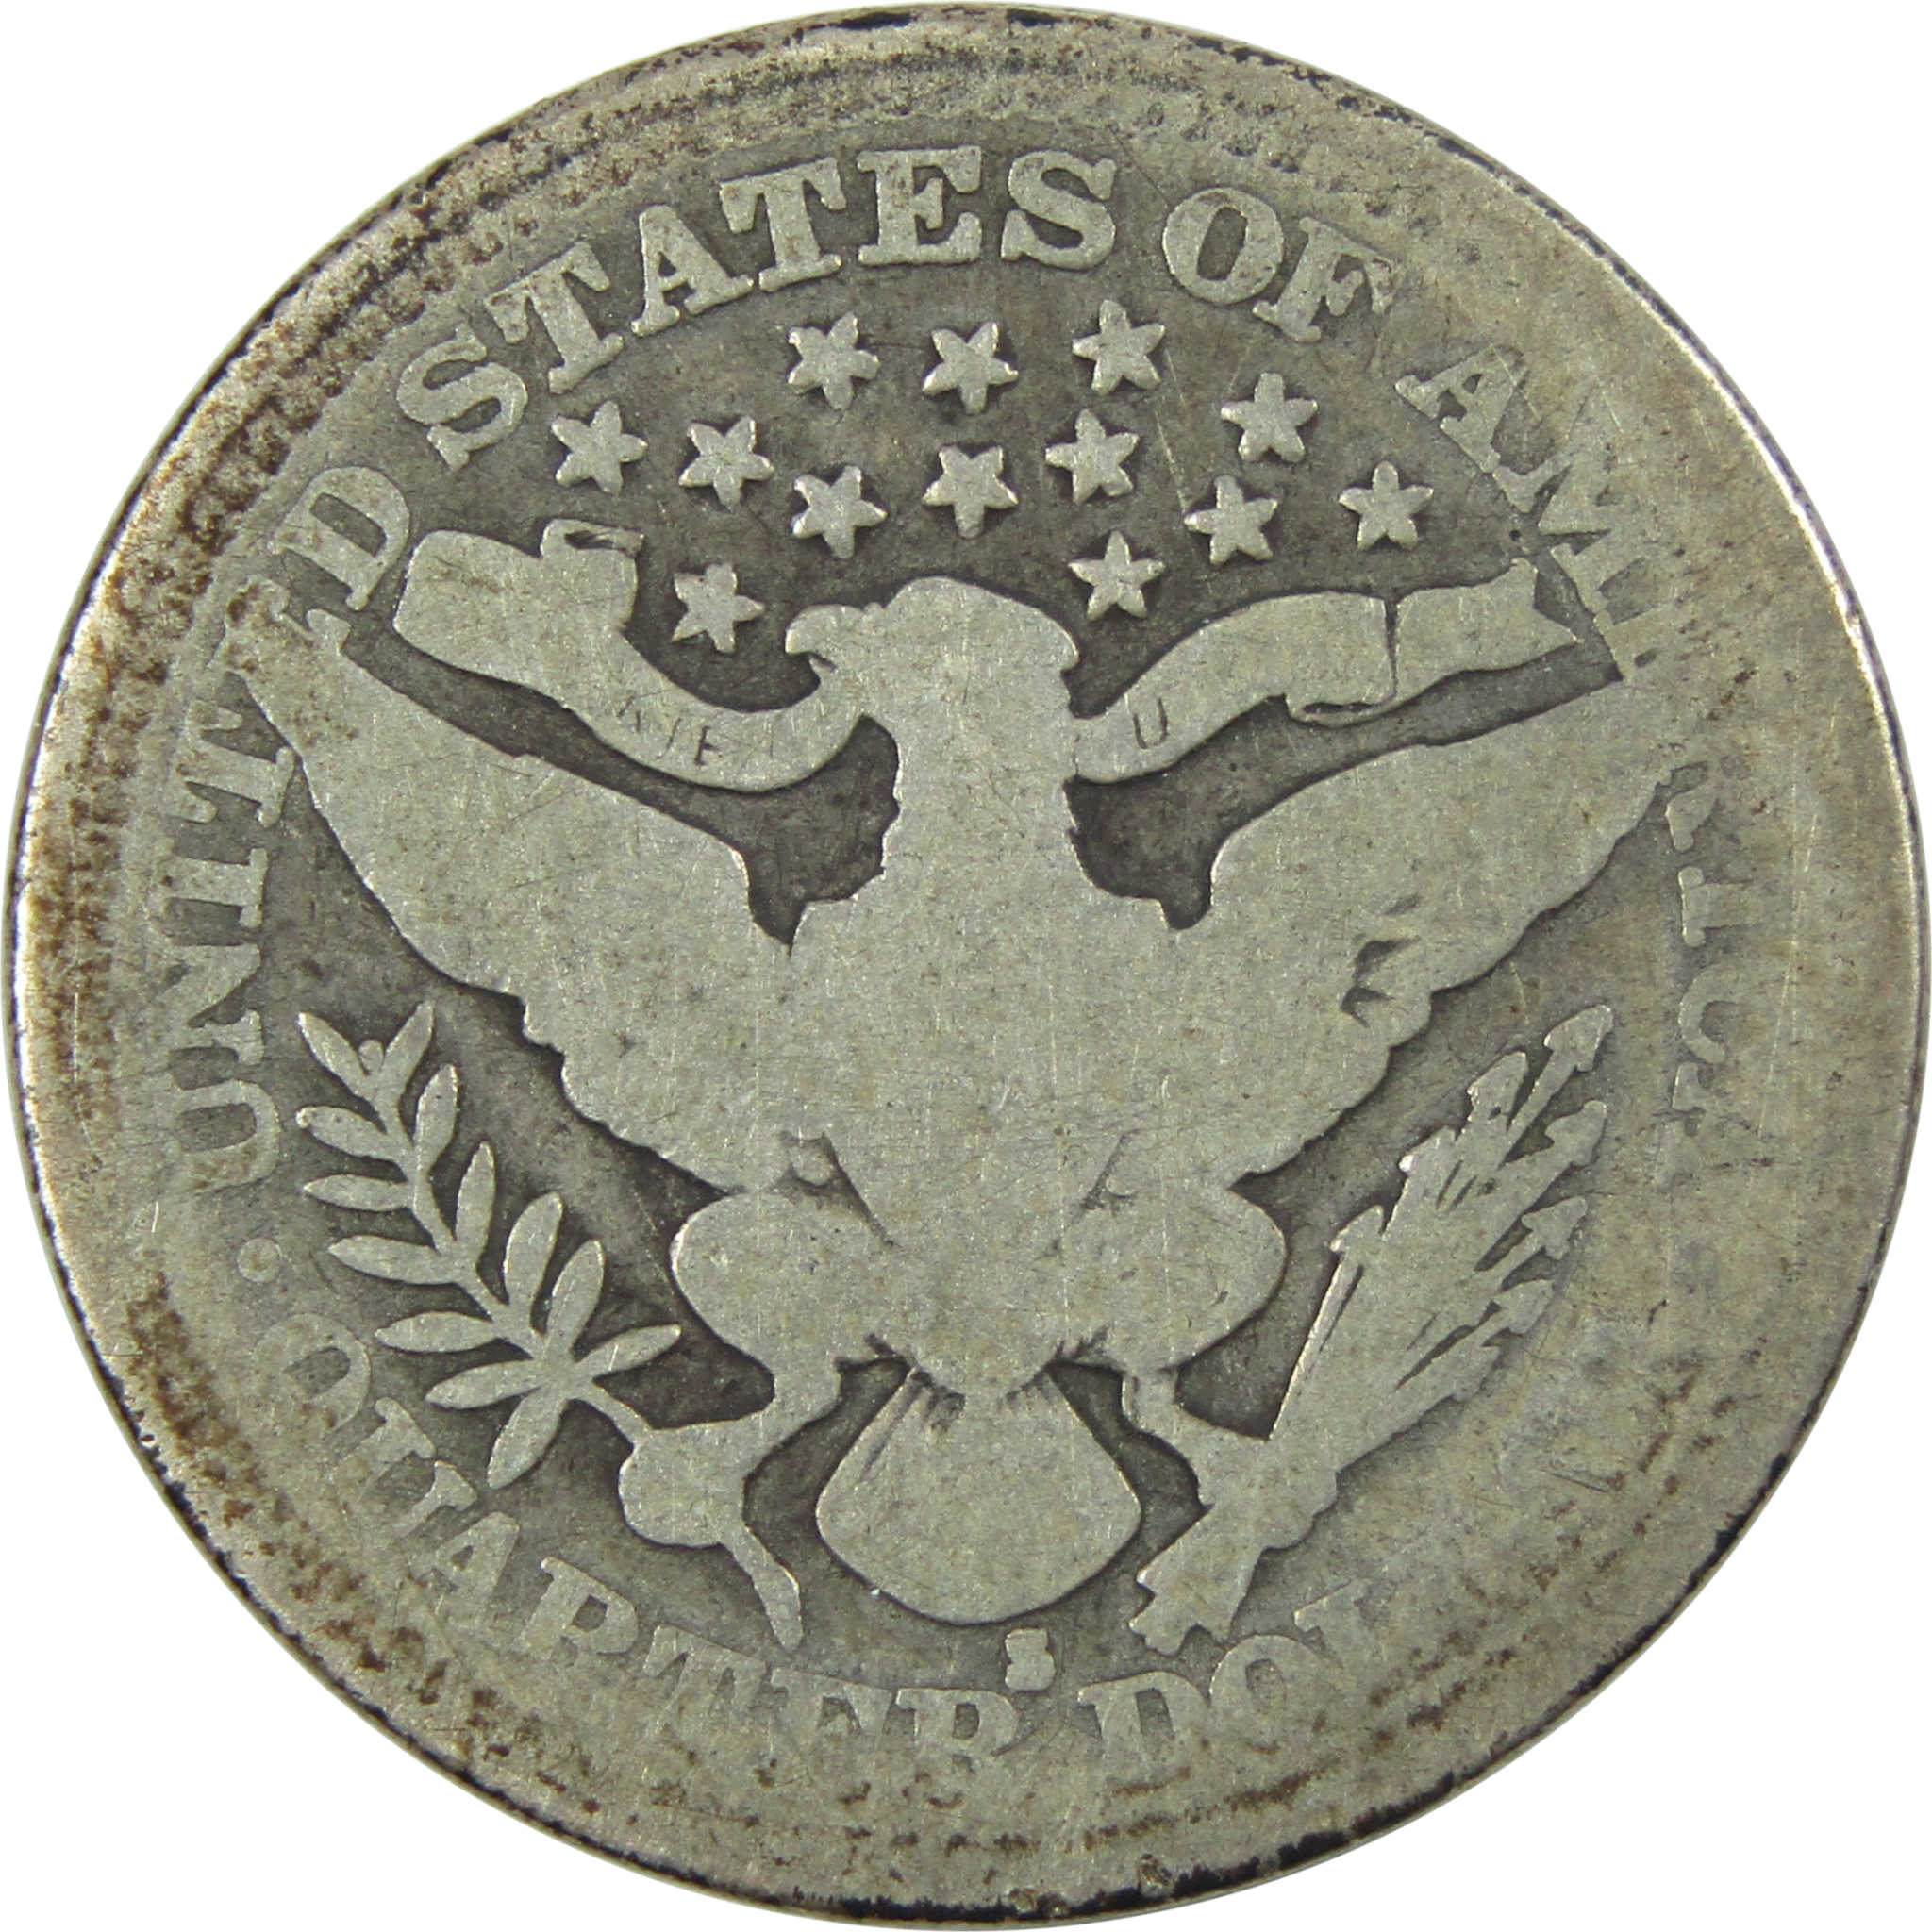 1914 S Barber Quarter AG About Good Silver 25c Coin SKU:I13987